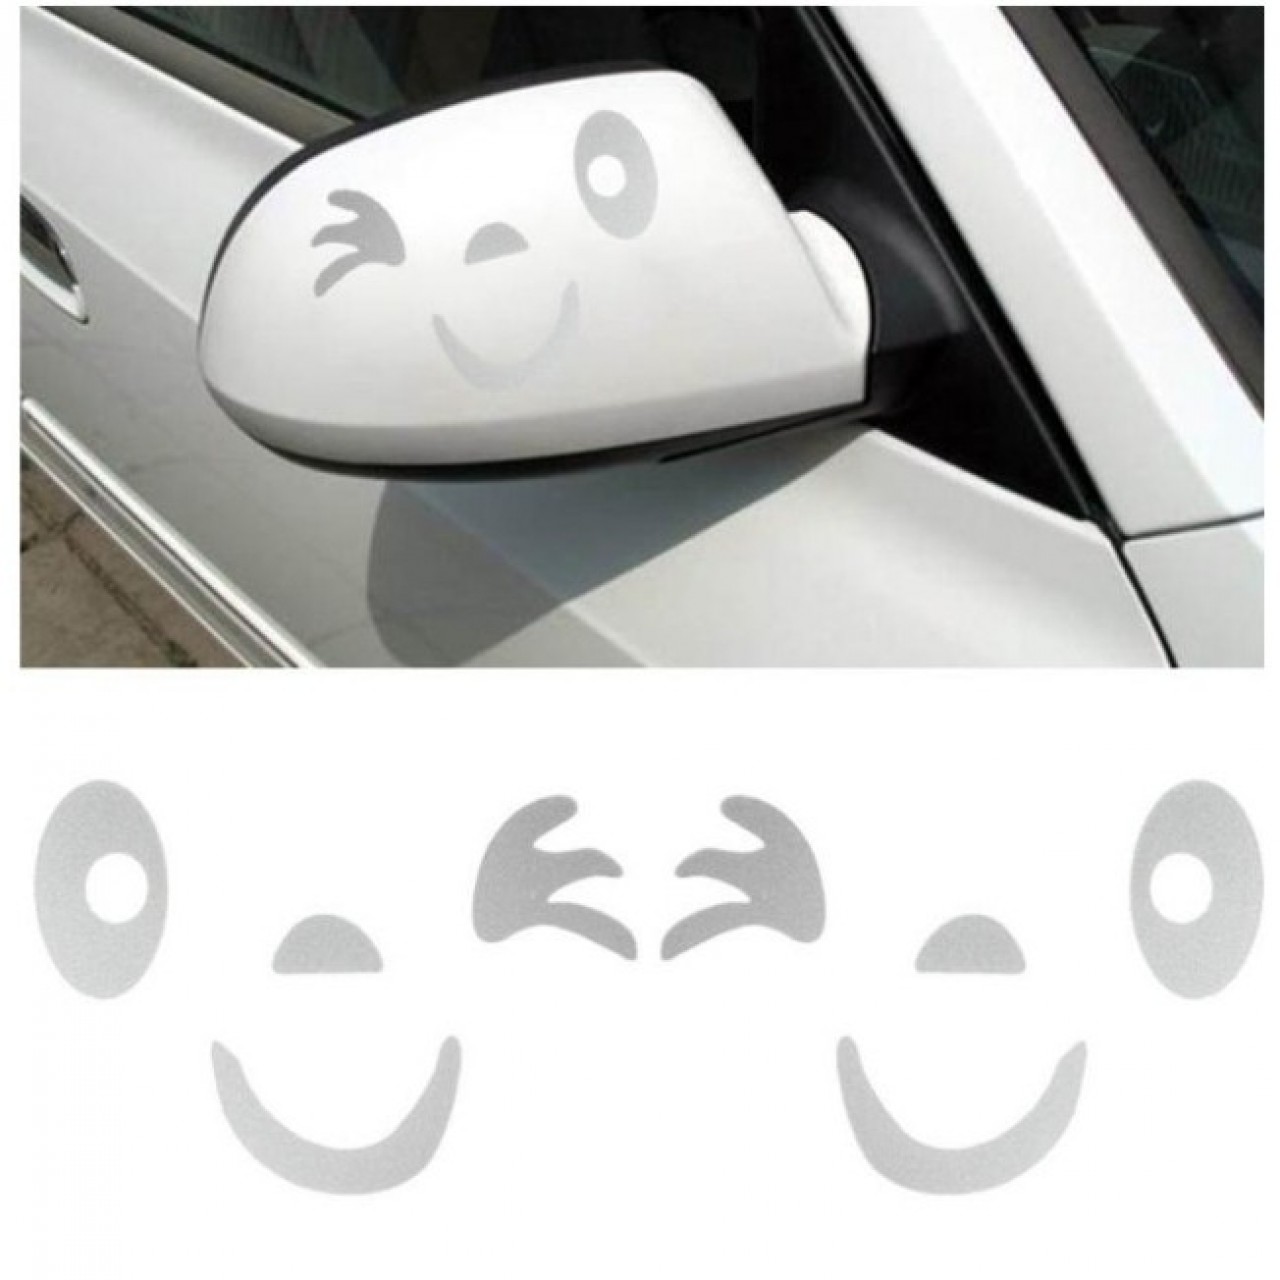 Smiling Blink Winks face car Styling Sticker - White